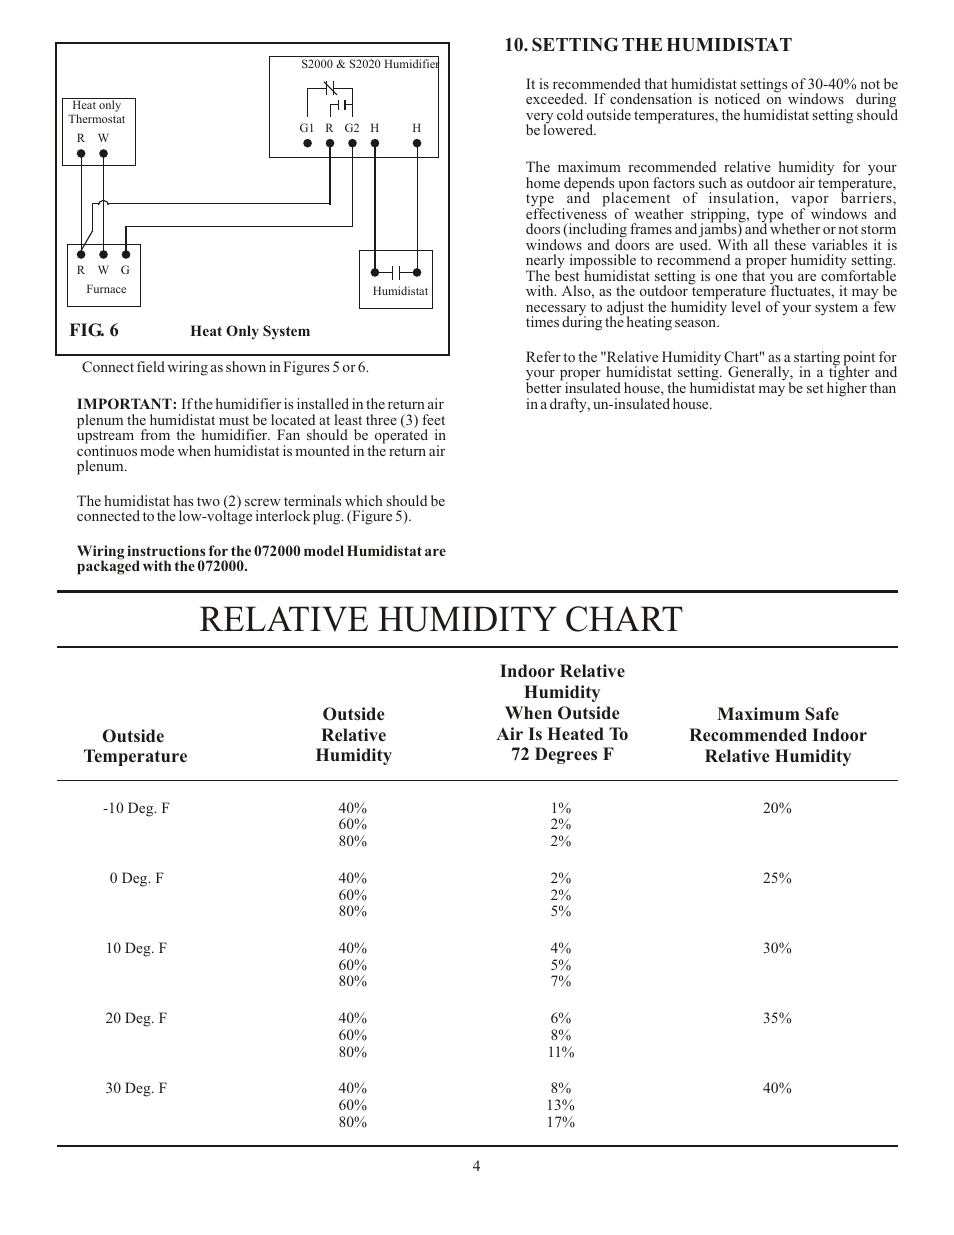 Relative humidity chart, Setting the humidistat | AutoFlo S2020 User